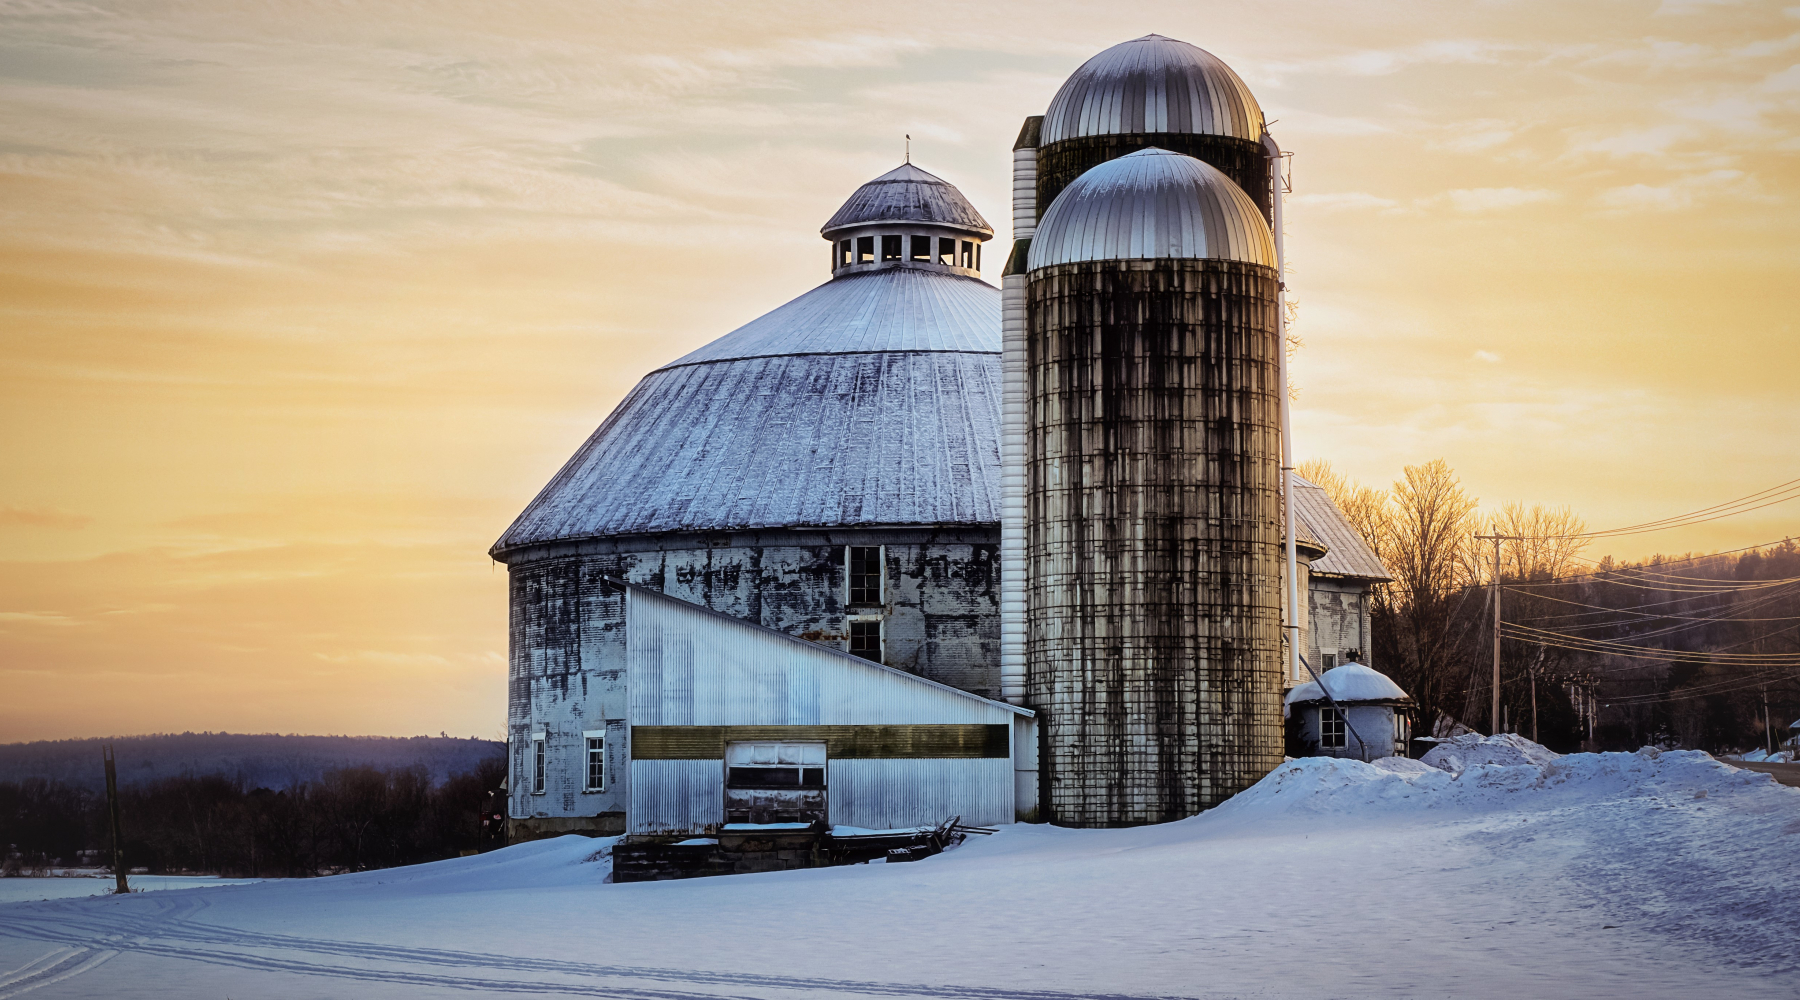 Image of a farm in winter